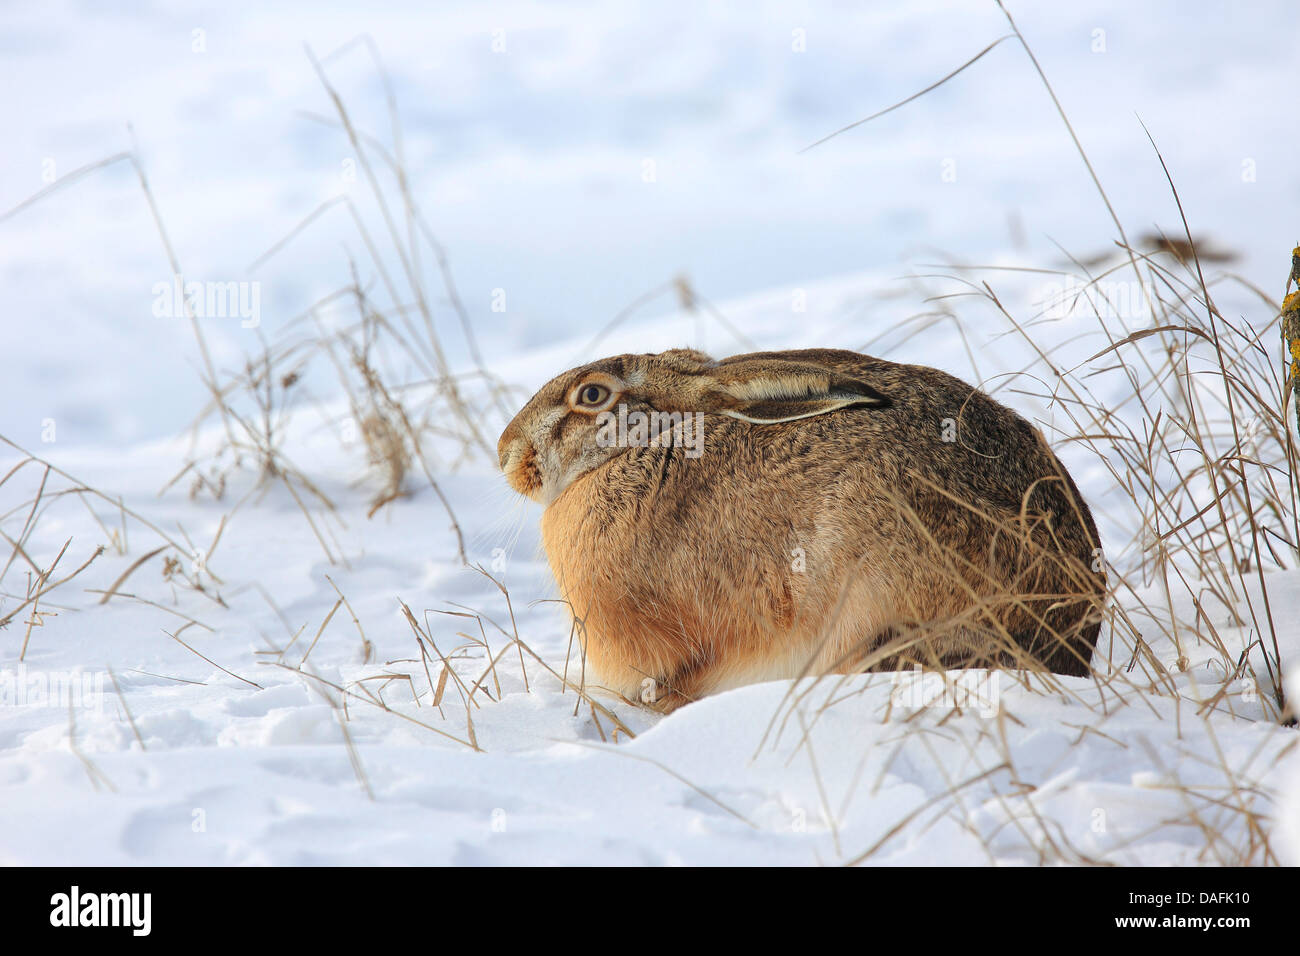 European hare, Brown hare (Lepus europaeus), sitting on snow with flattened ears, Austria, Burgenland Stock Photo